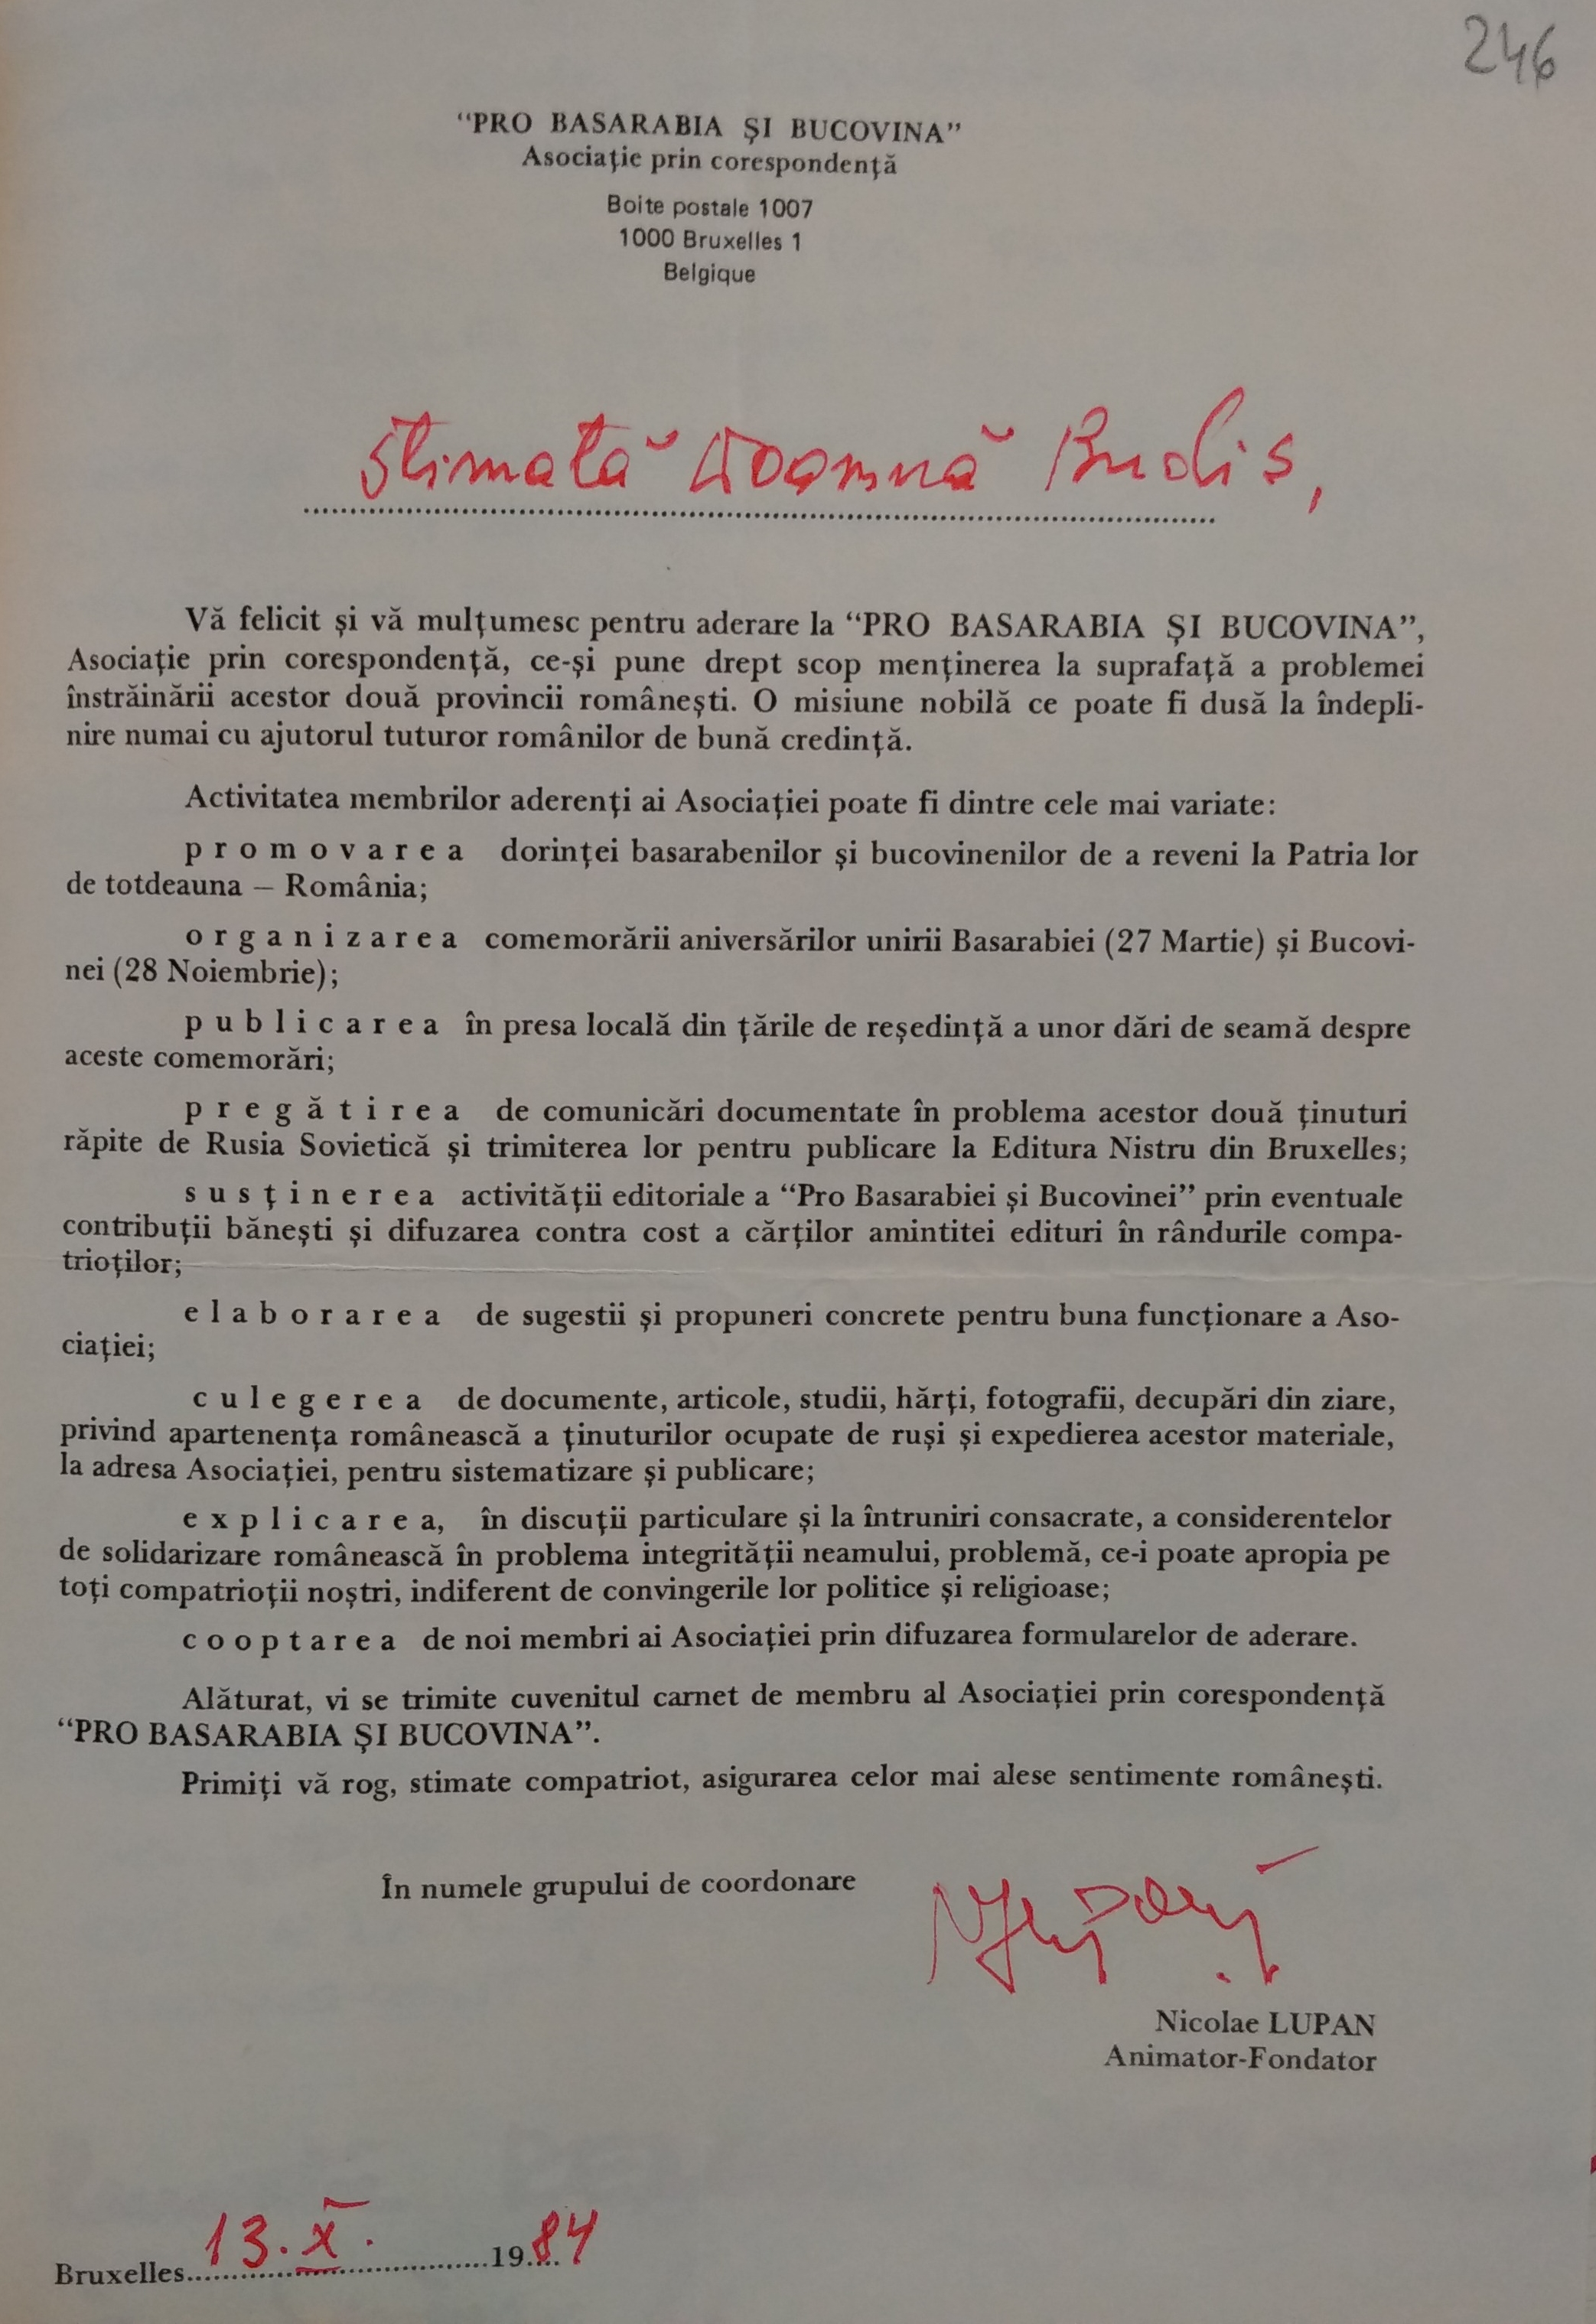 Letter from Nicolae Lupan to Sanda Budiș, 13 October 1984